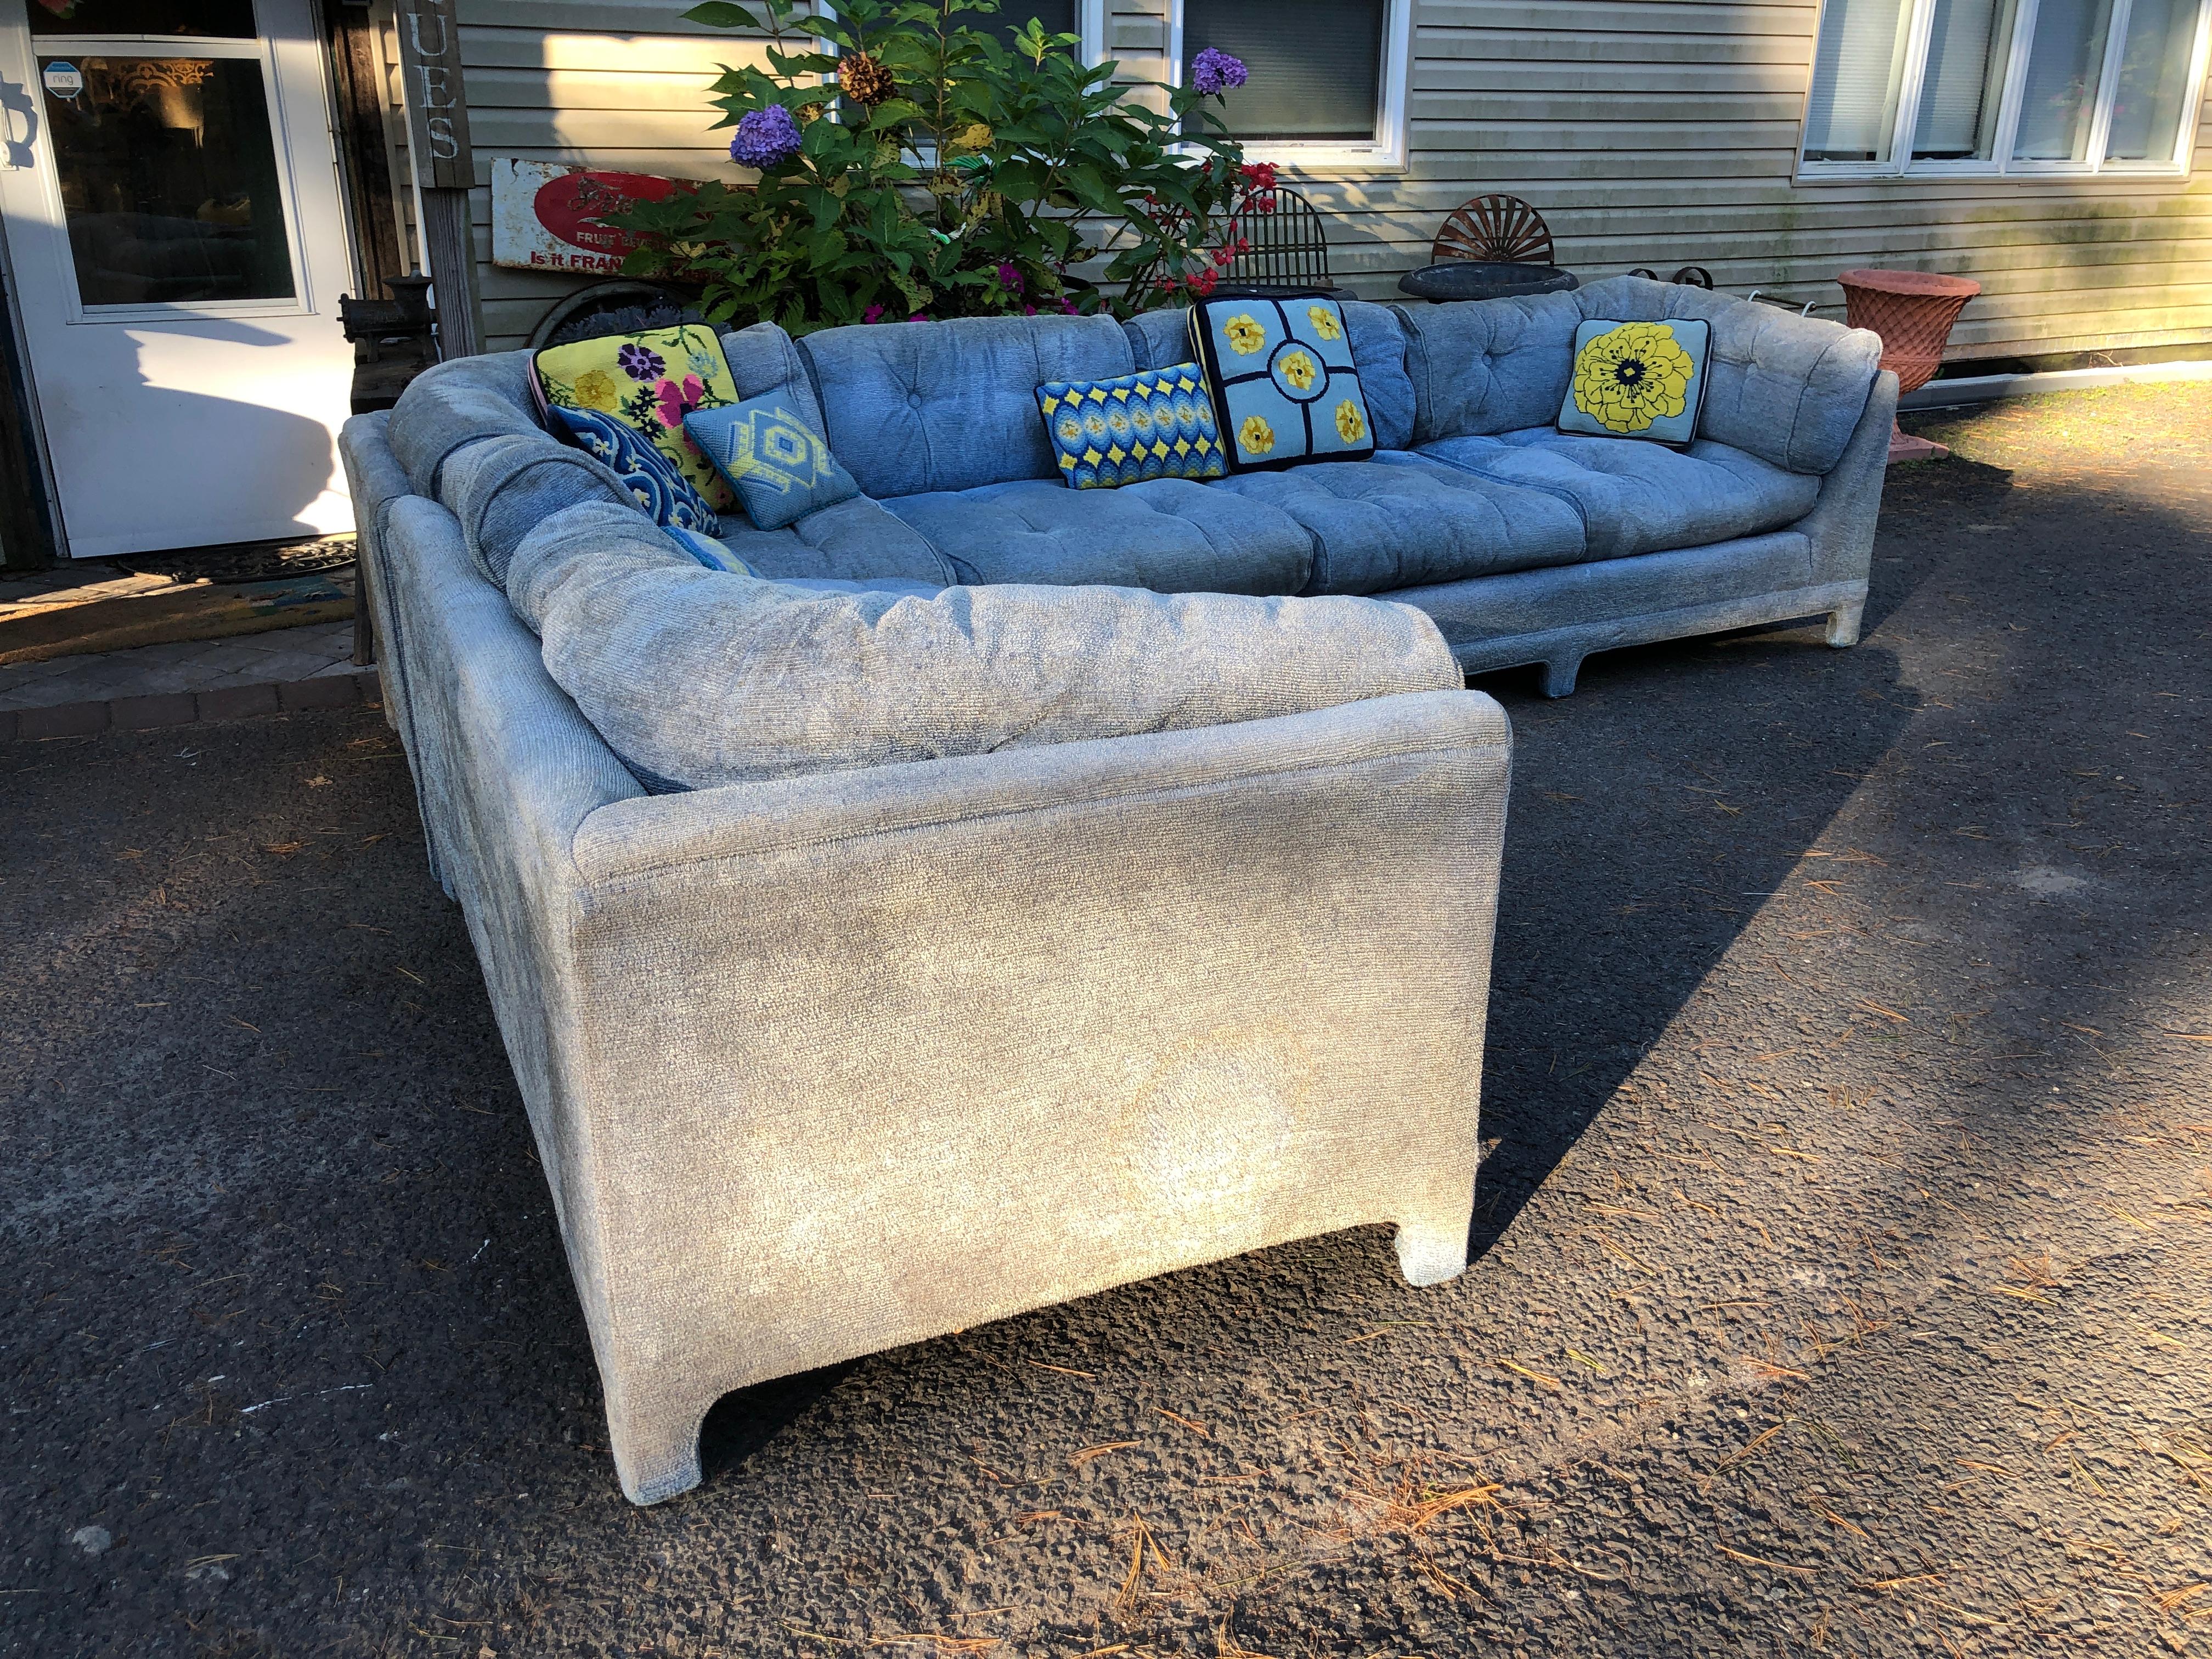 American Sensational 3 Piece Milo Baughman style Sectional Sofa Century Furniture Co. For Sale